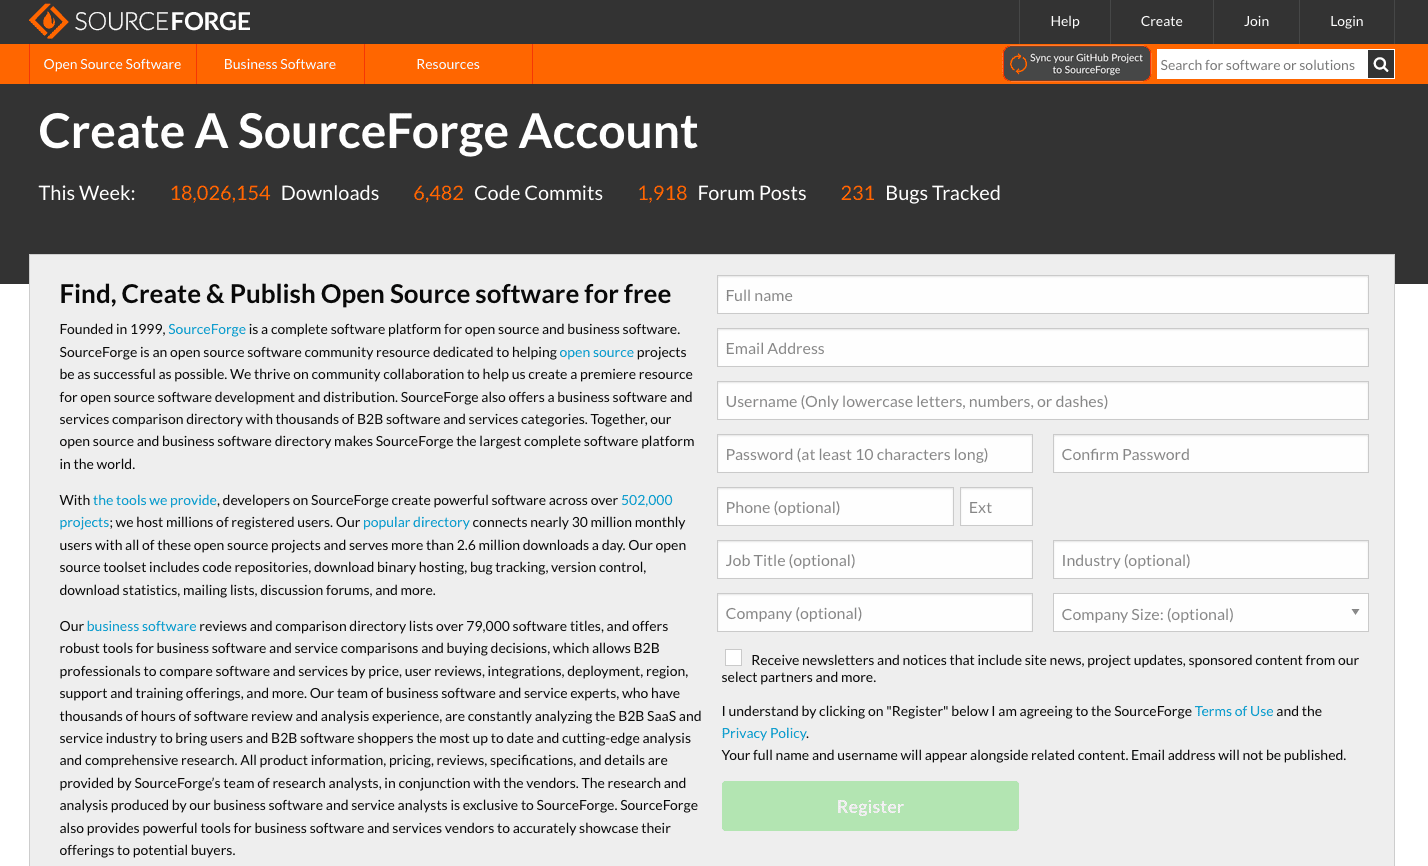 Create a SourceForge account